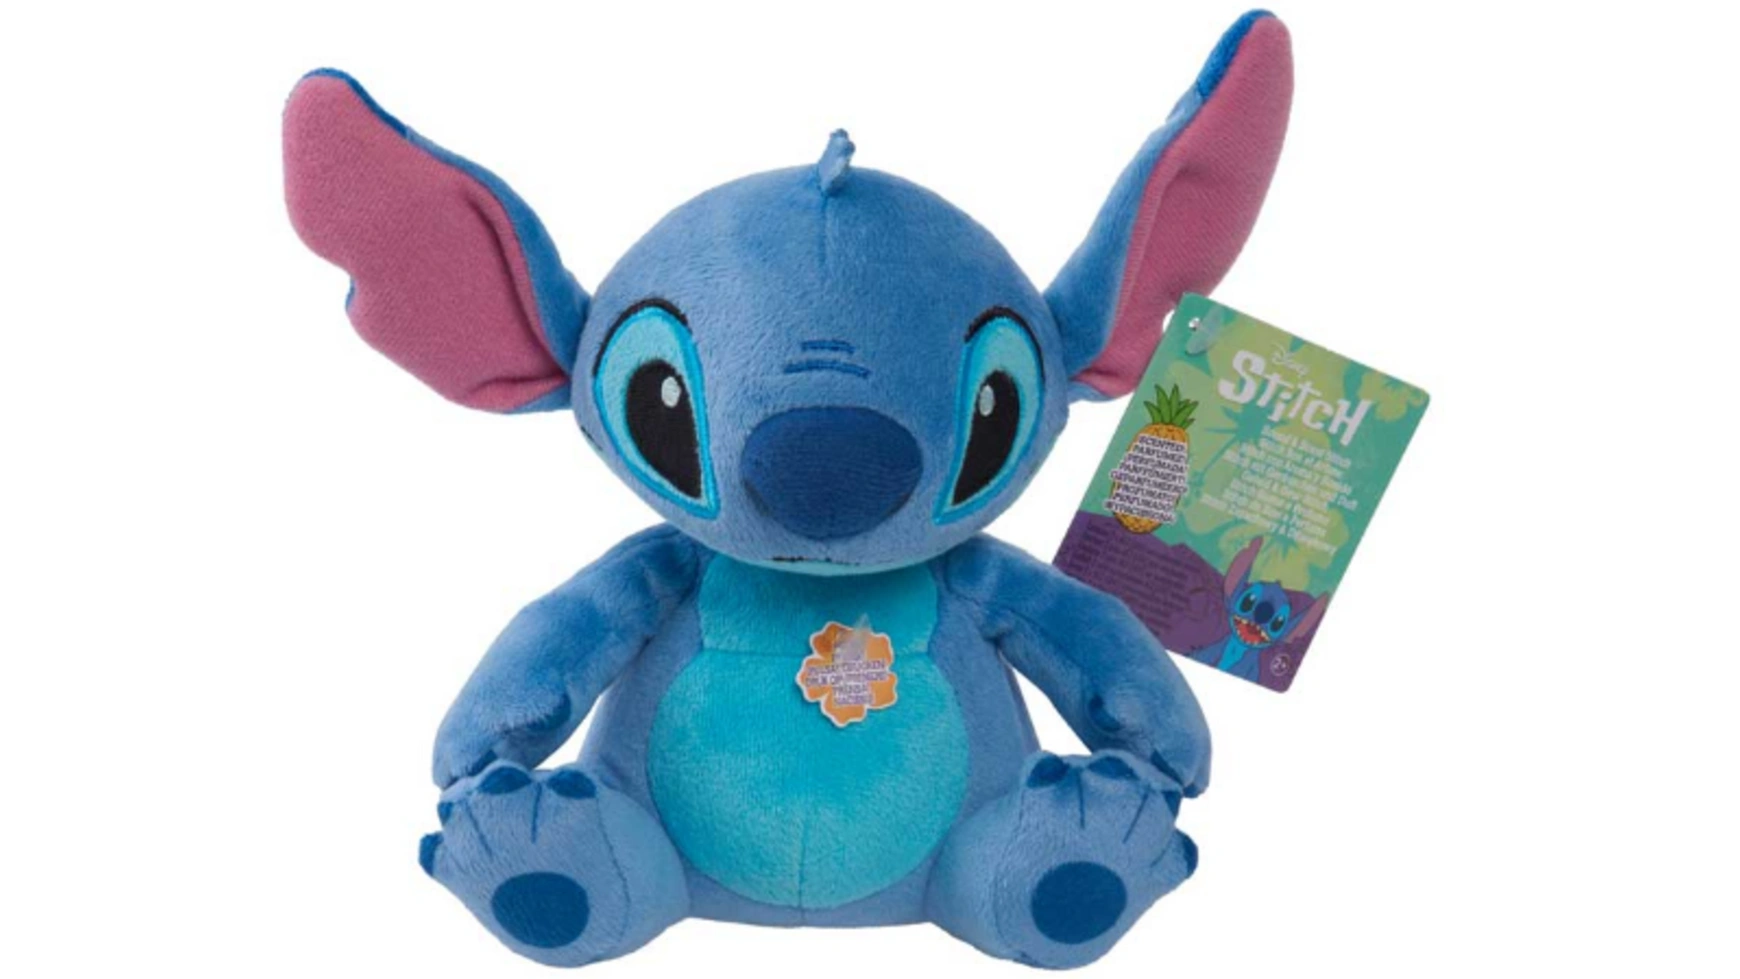 Disney Плюшевая игрушка Stitch Sound 15 см disney store япония 2020 плюшевая игрушка мулан плюшевая кукла игрушка